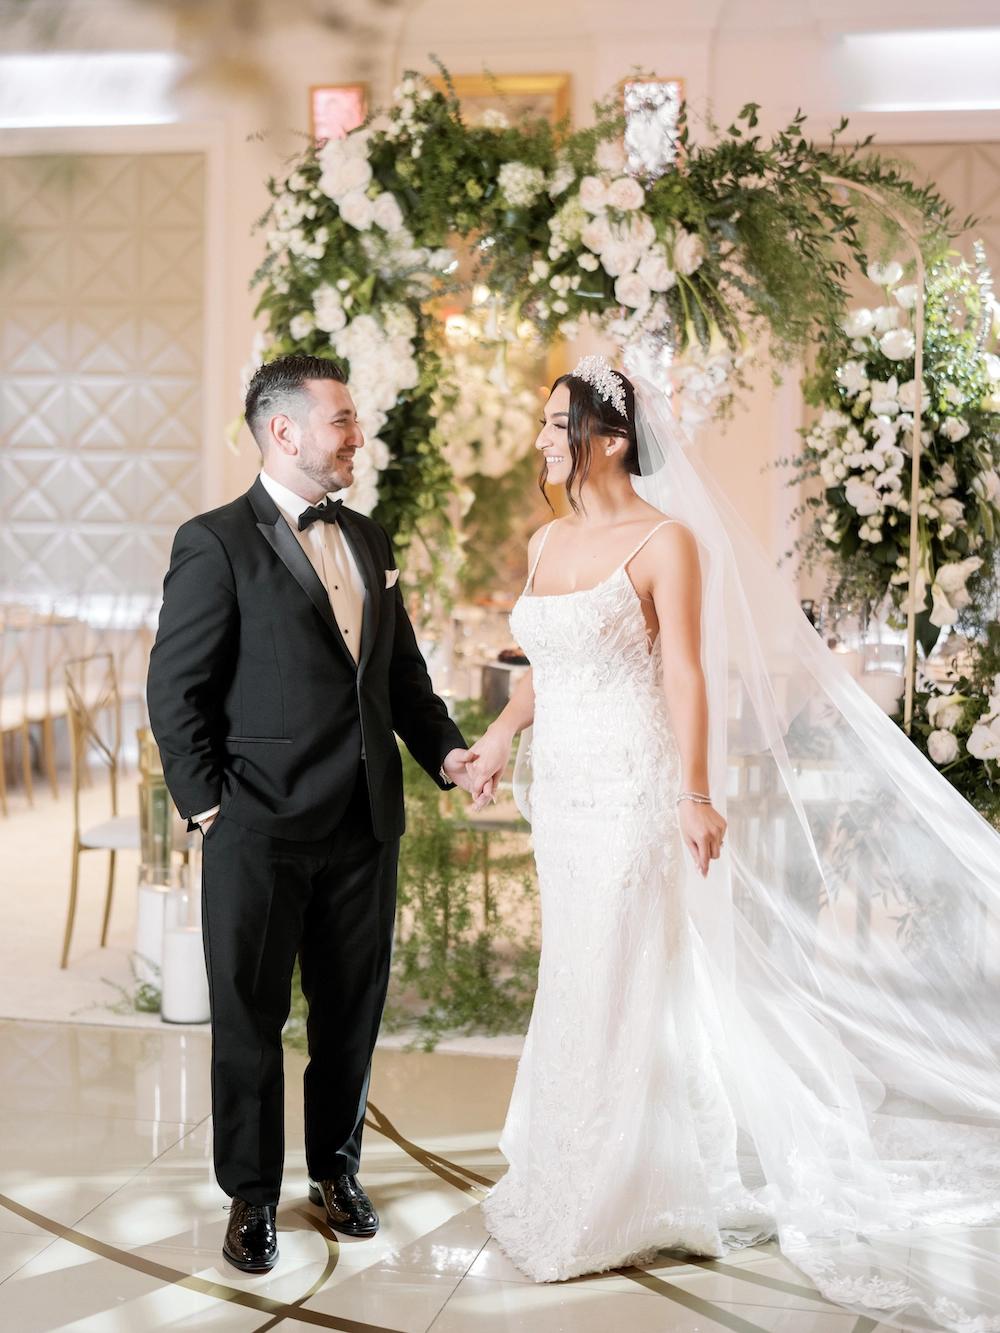 Armine Wears Fitted Sparkle Lace Wedding Dress. Desktop Image